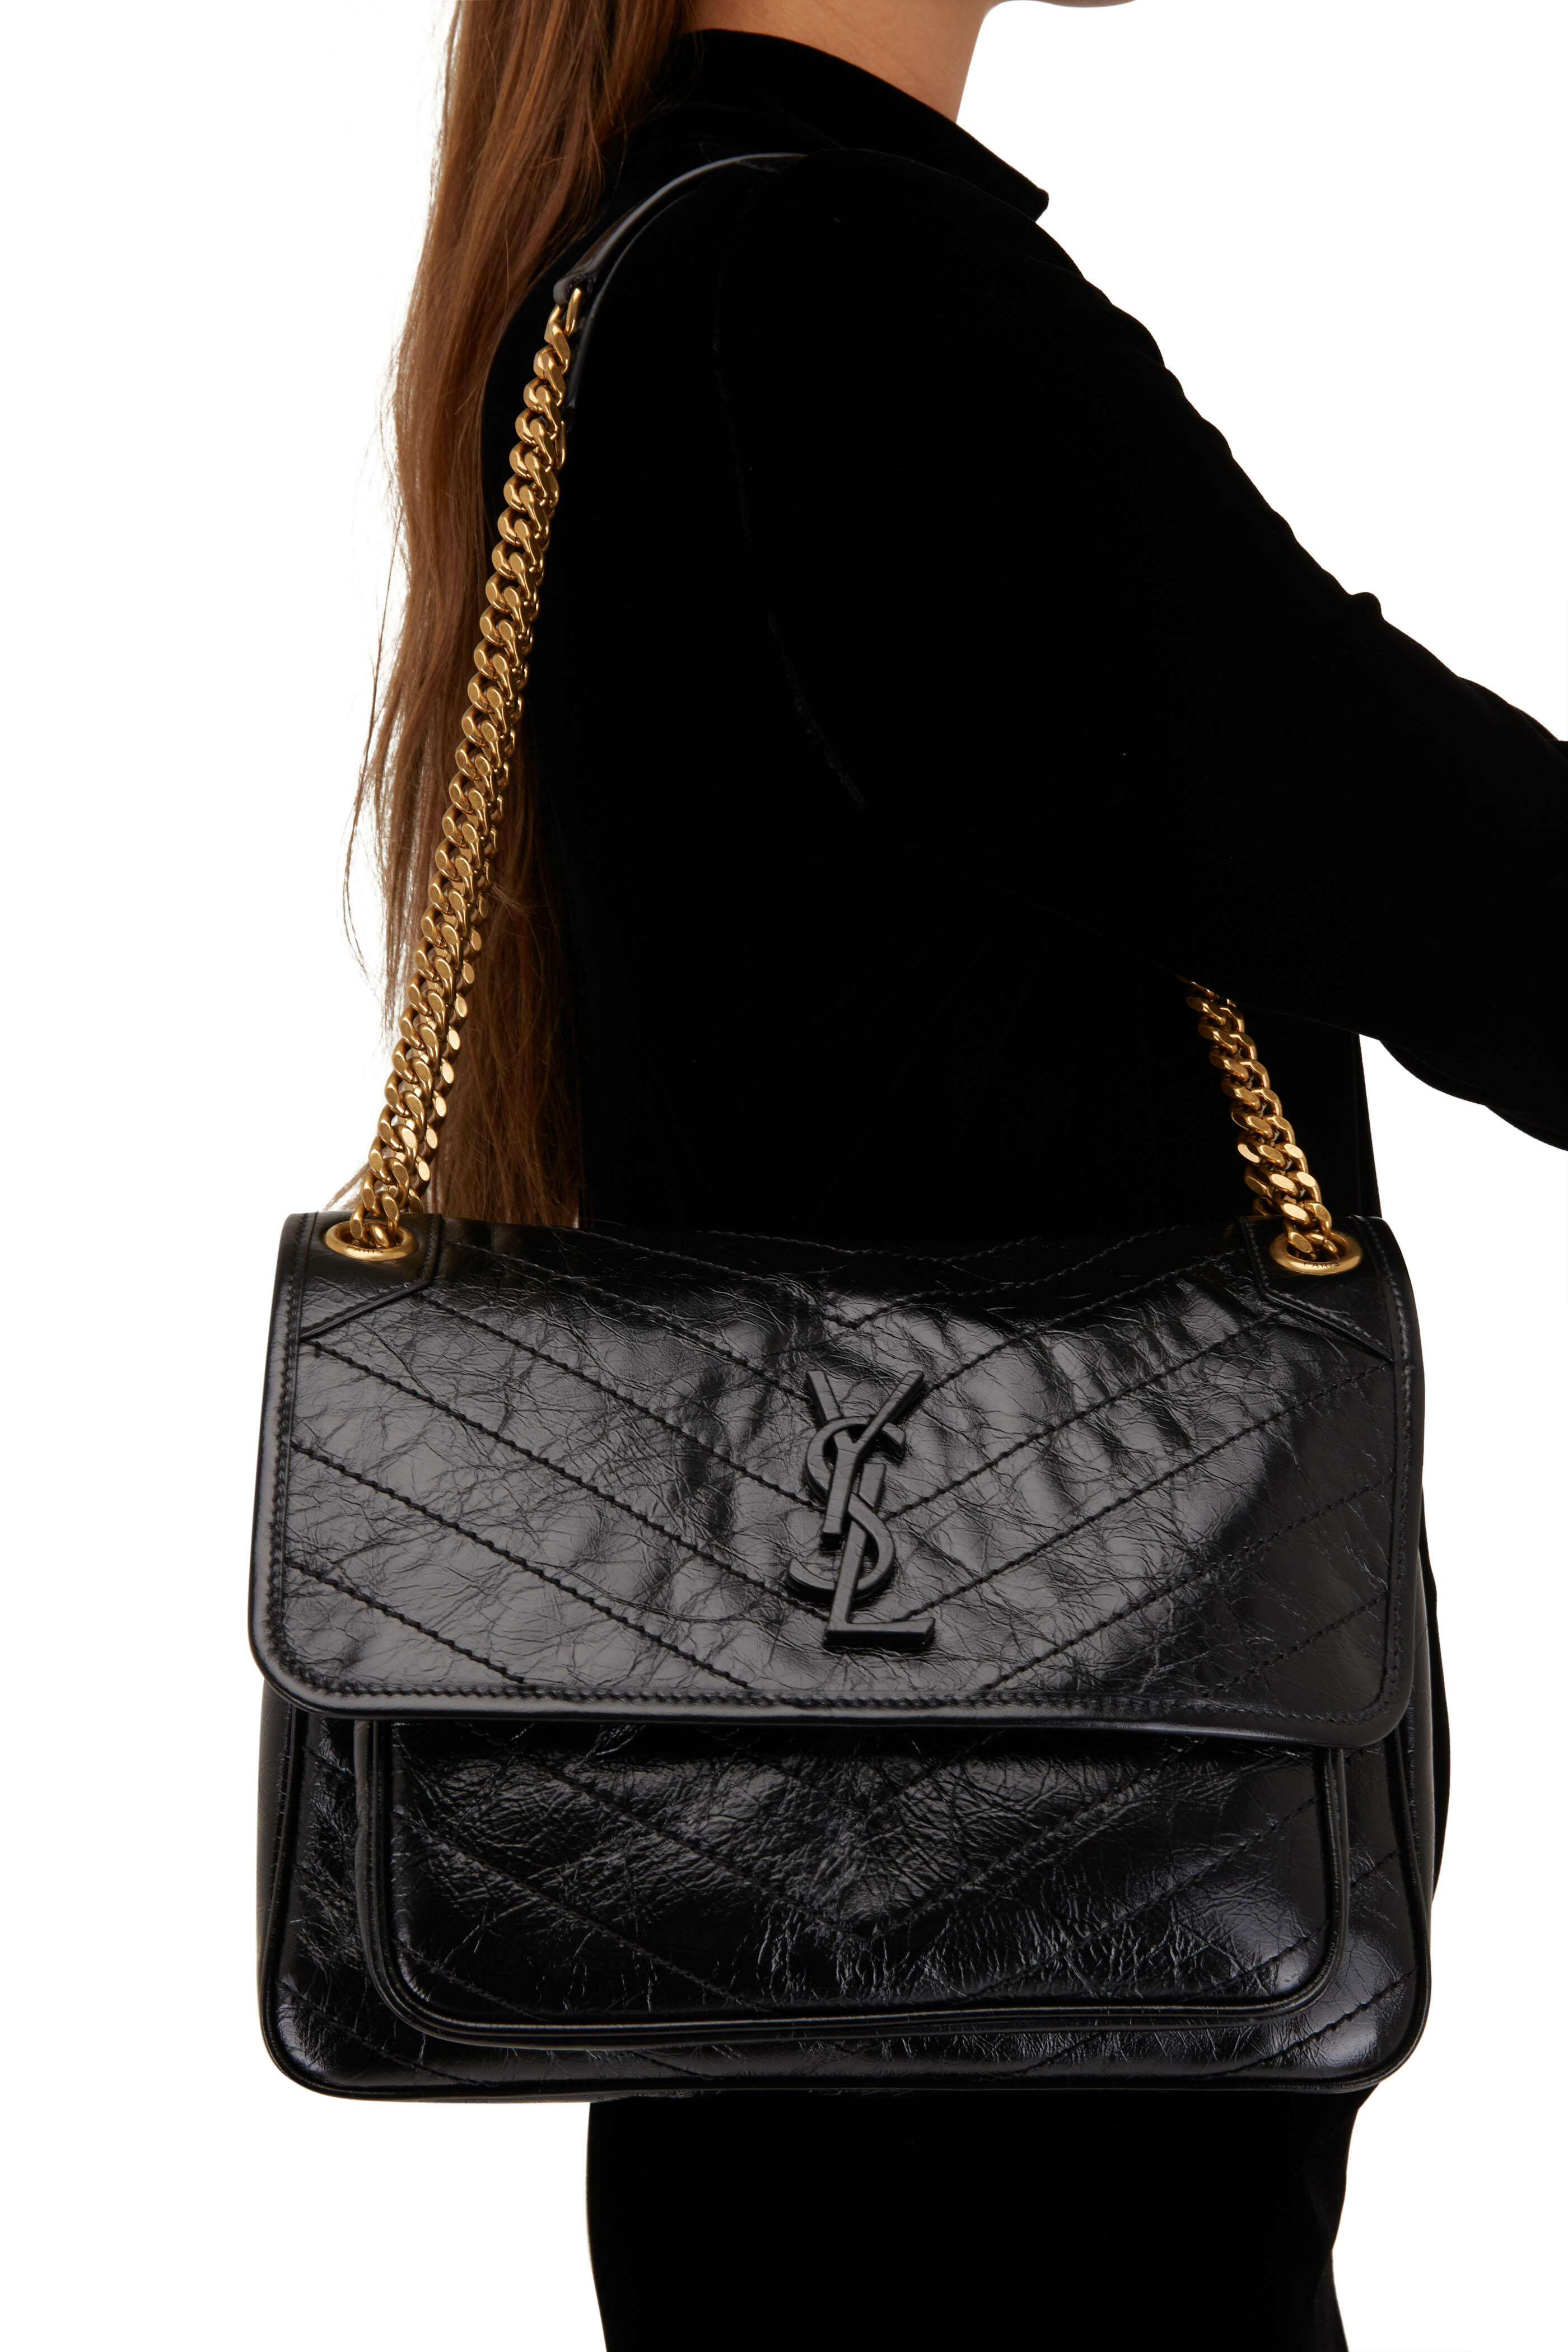 Saint Laurent Women's Medium Niki Leather Shoulder Bag